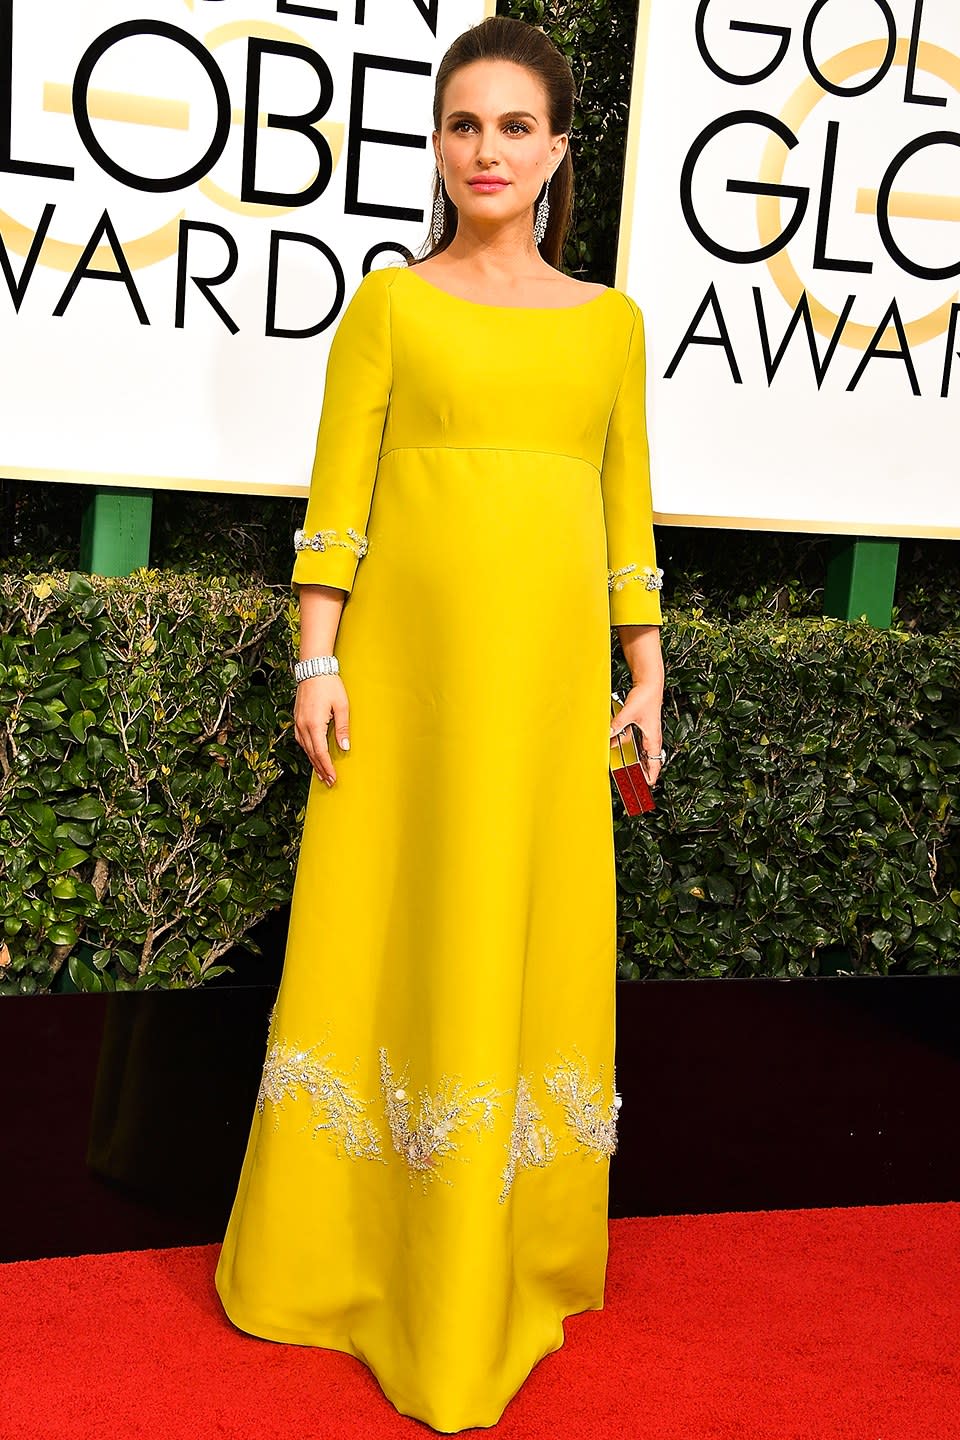 Natalie Portman at the Golden Globes (2017)